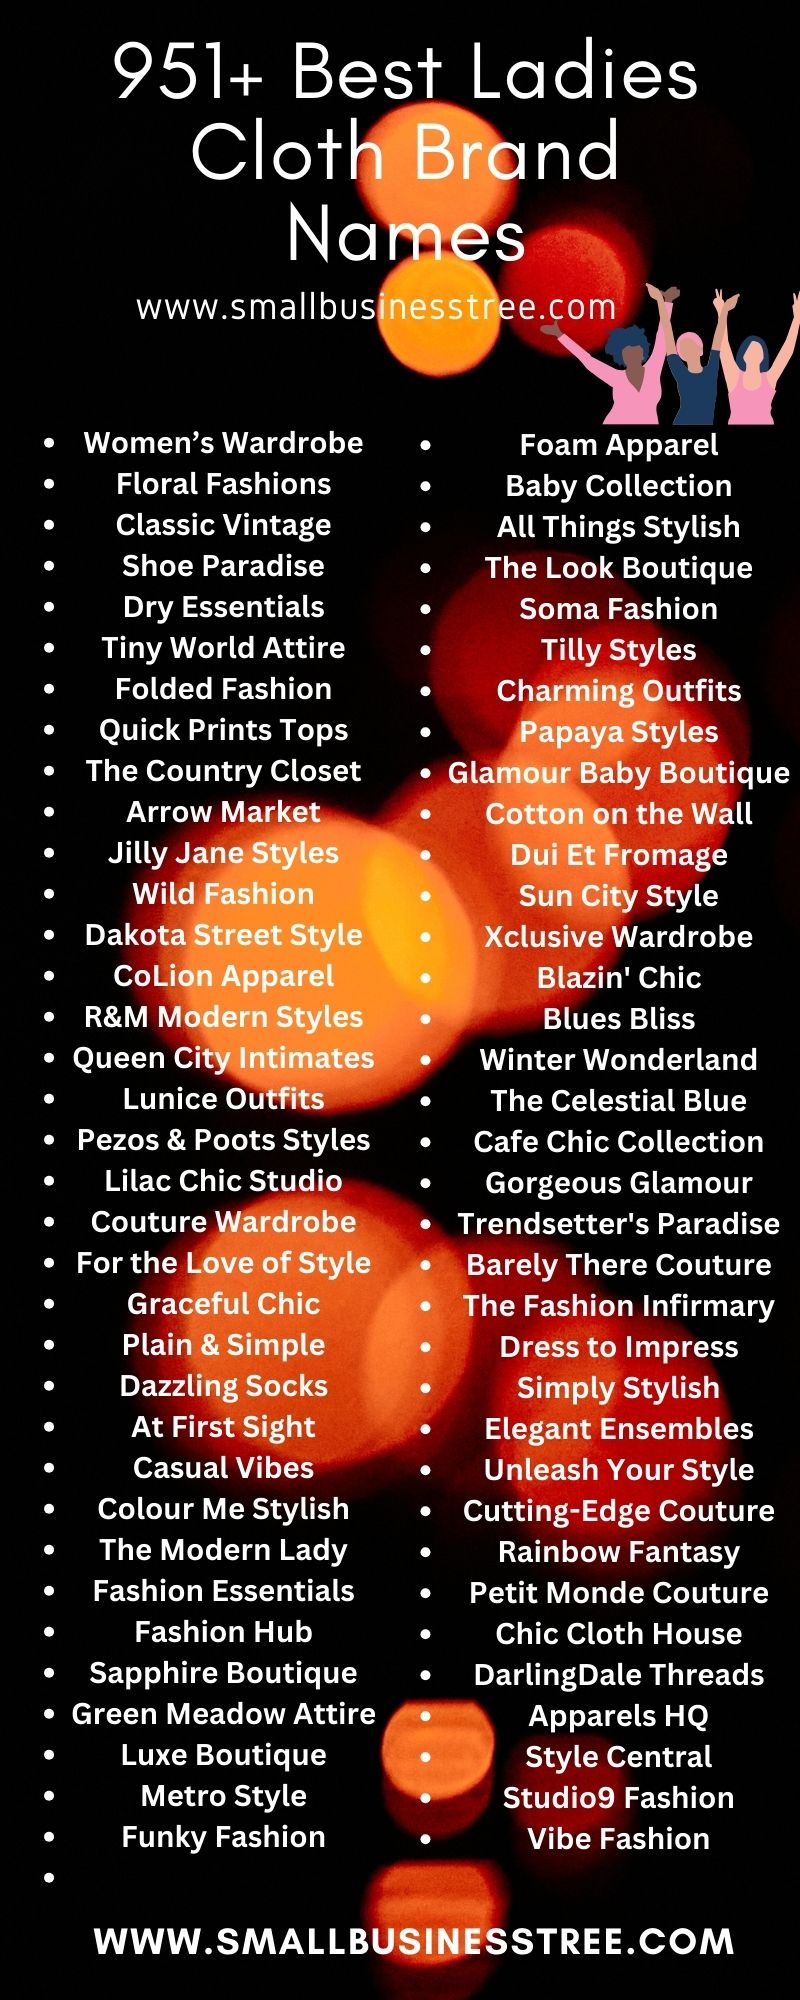 Ladies Cloth Brand Names List